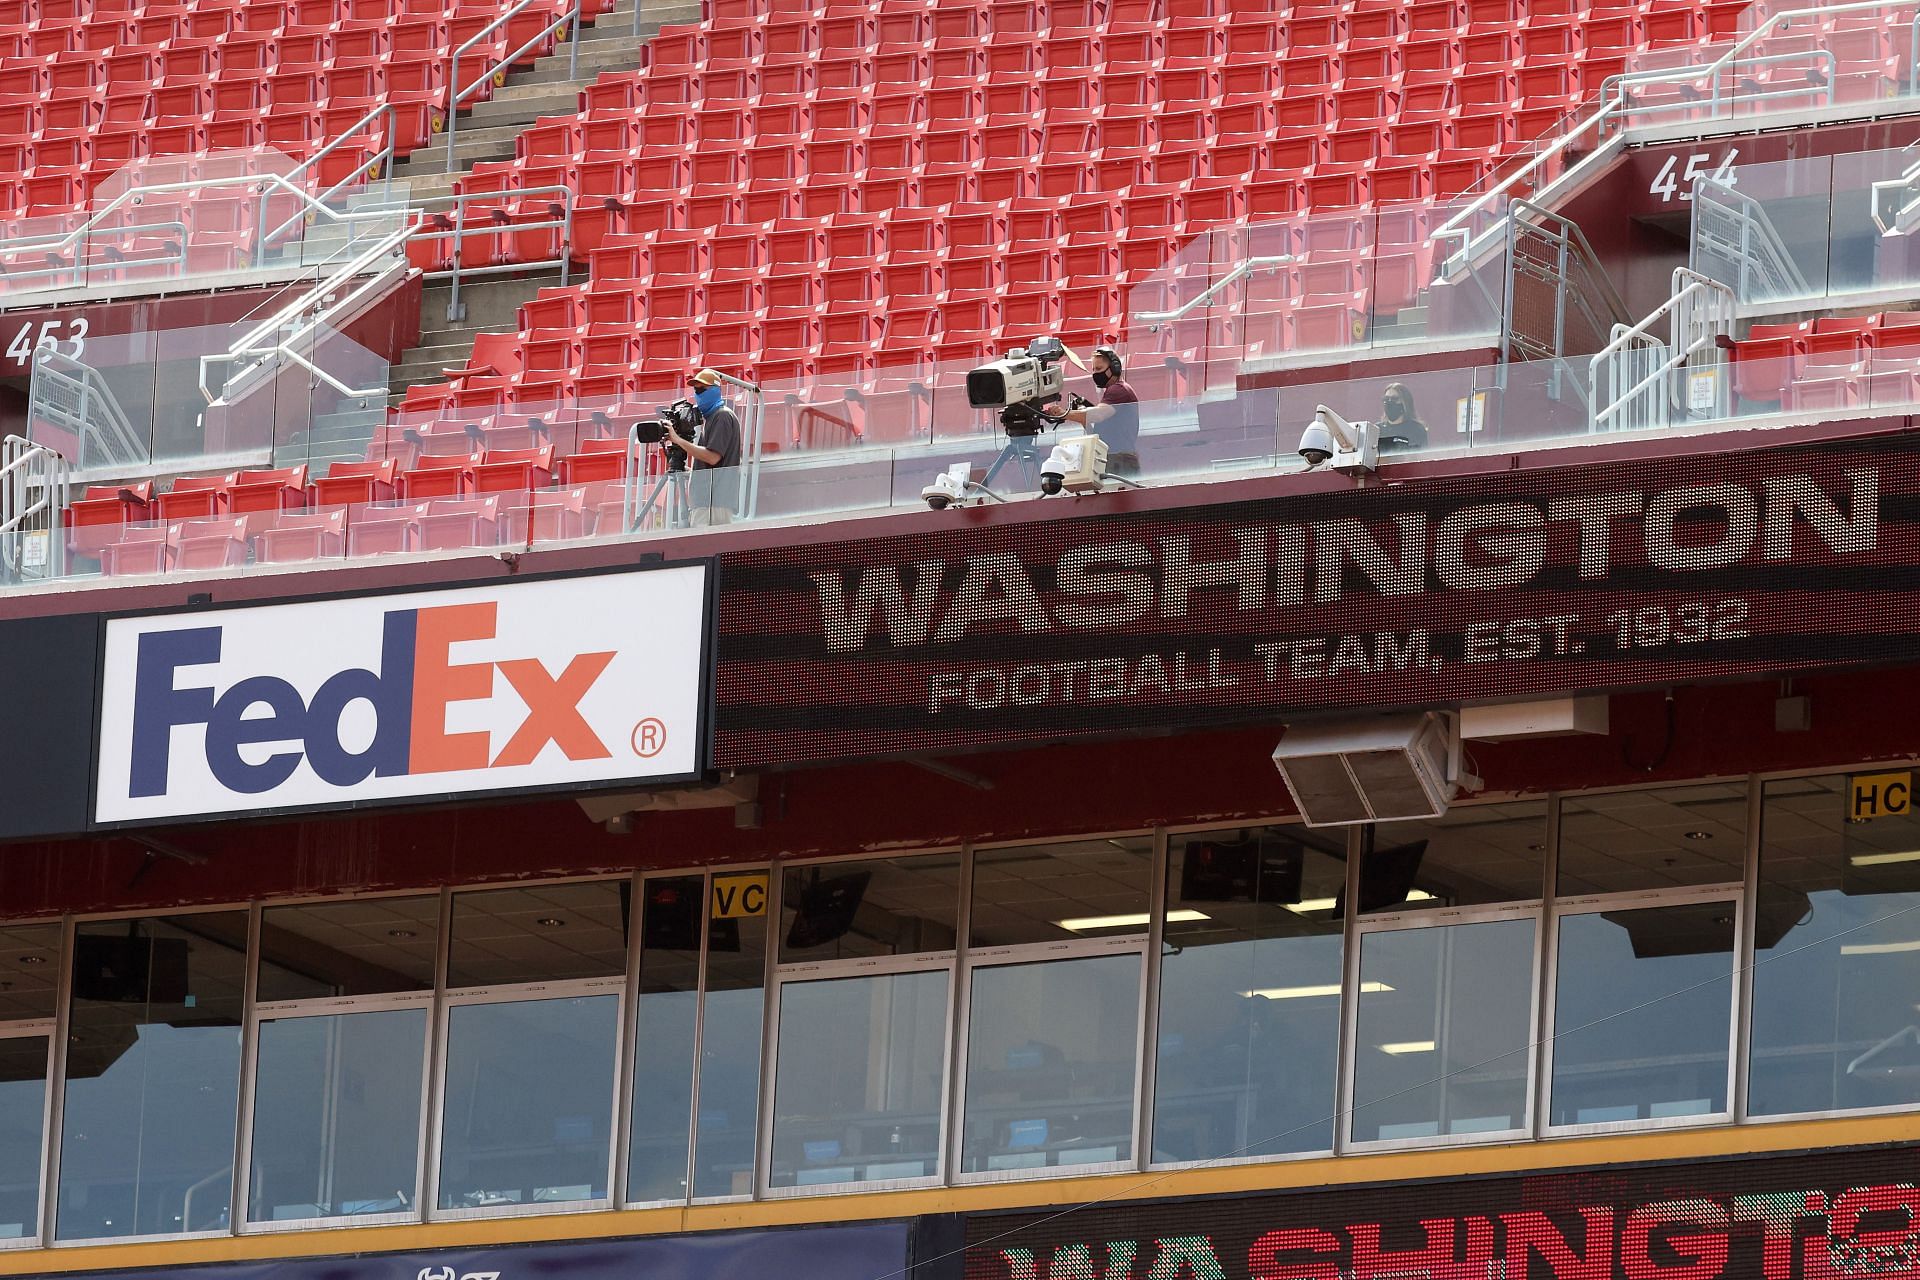 Washington Commanders home stadium FedEx Field.